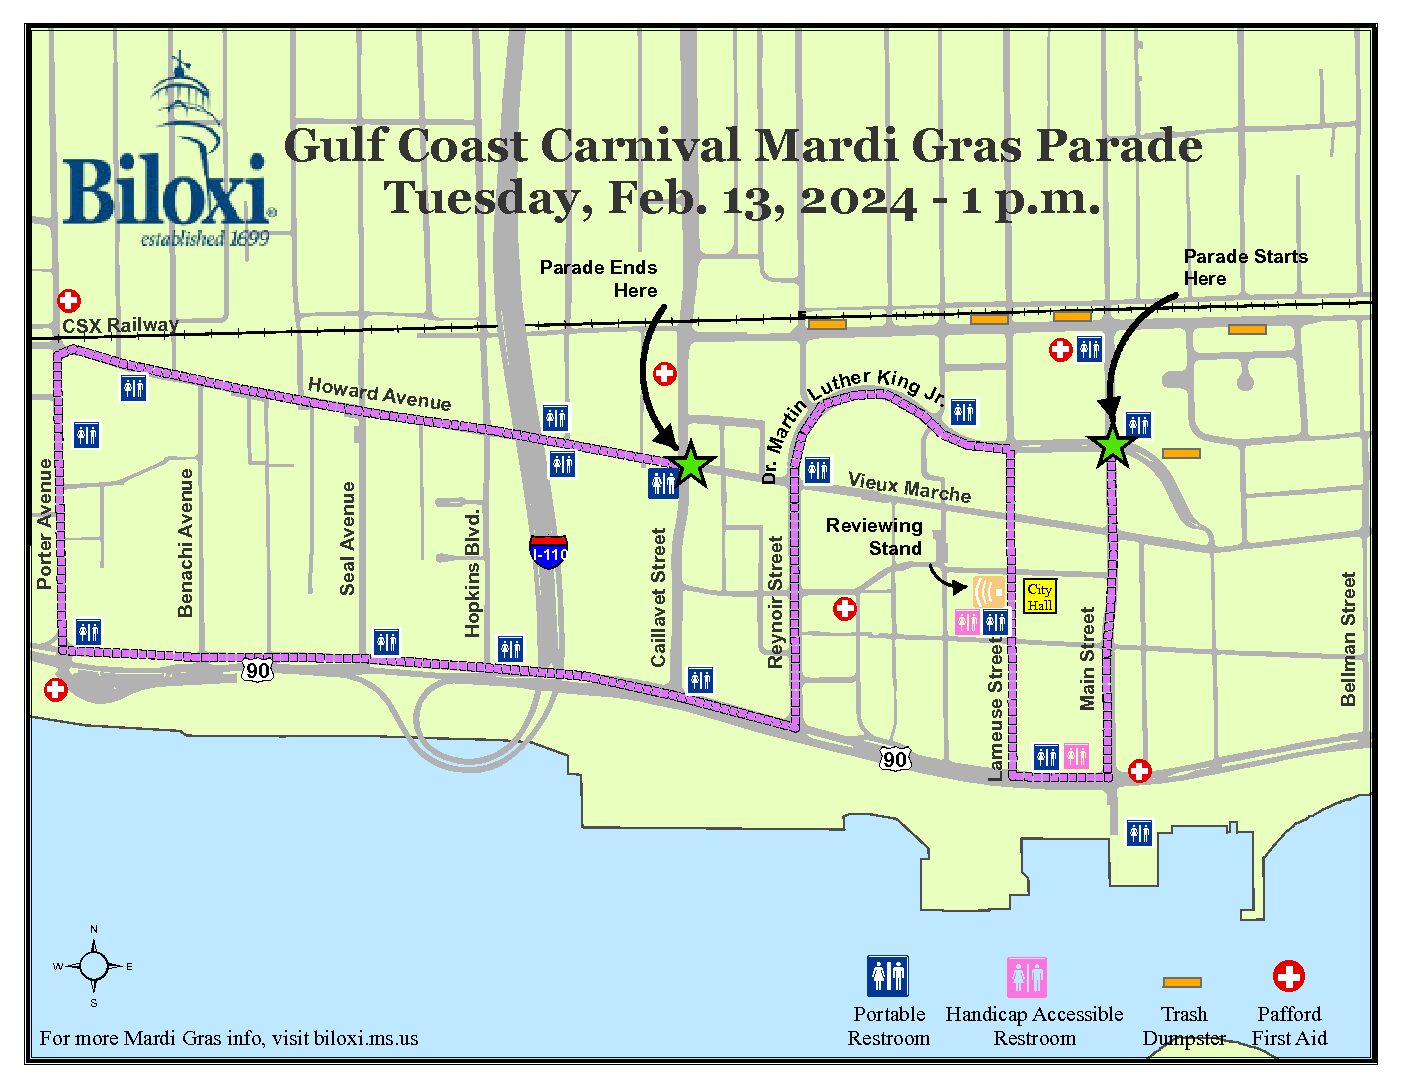 Mardi Gras Parade Route Map Gulf Coast 2024